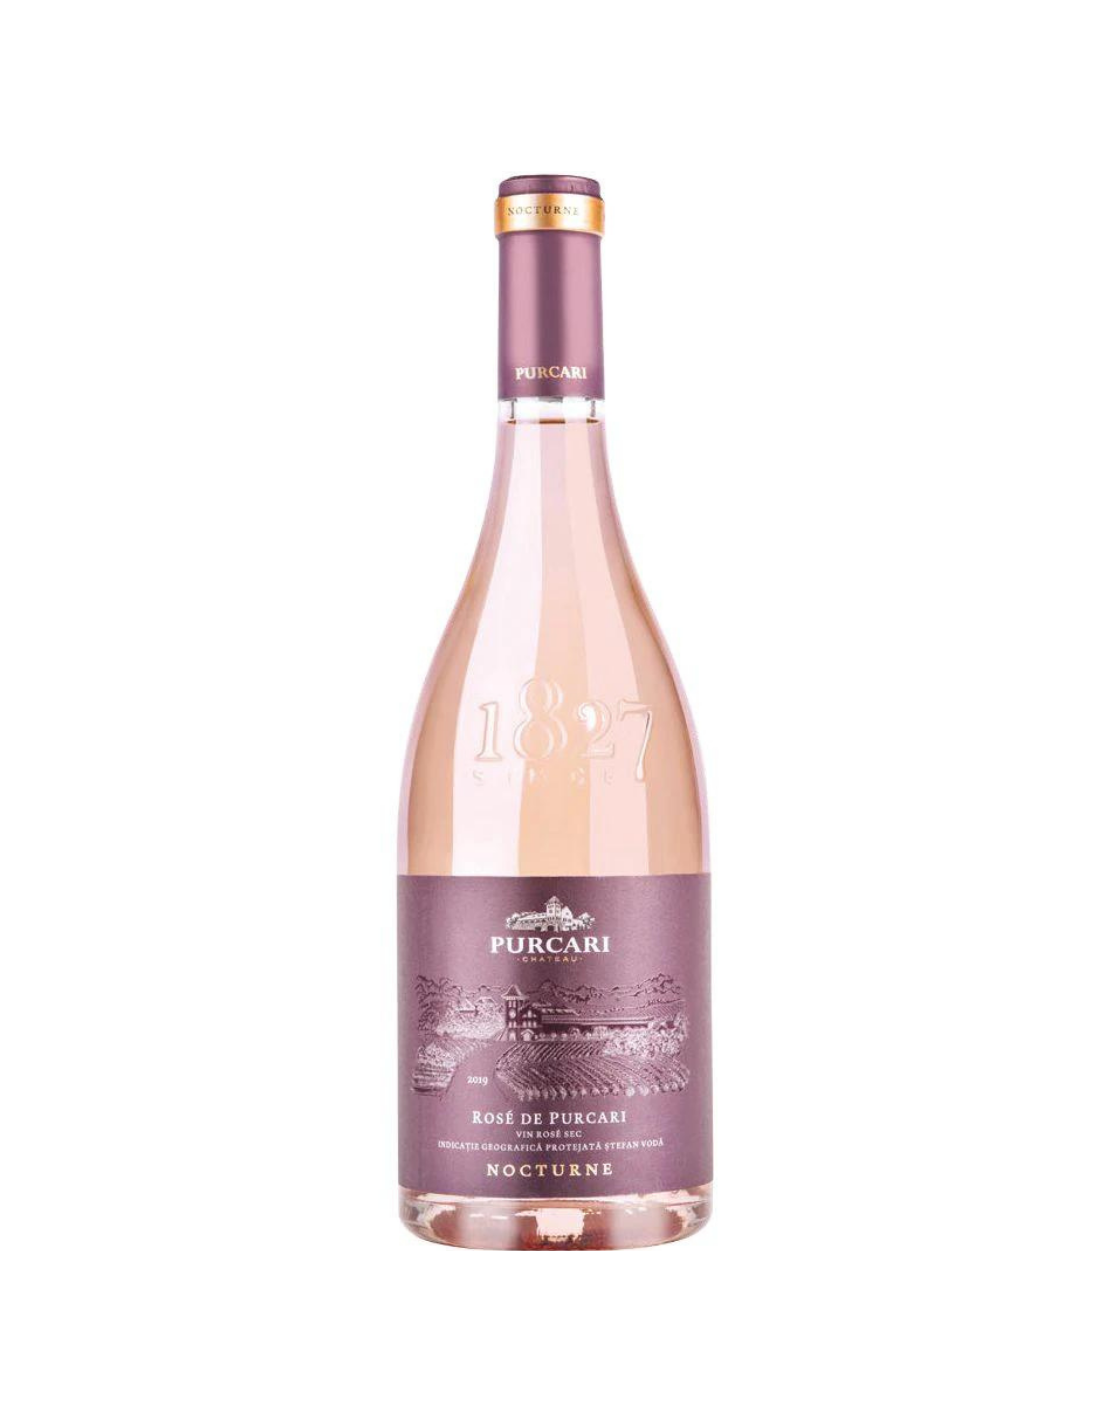 Vin roze sec Purcari Nocturne, 0.75L, 13% alc., Romania alcooldiscount.ro